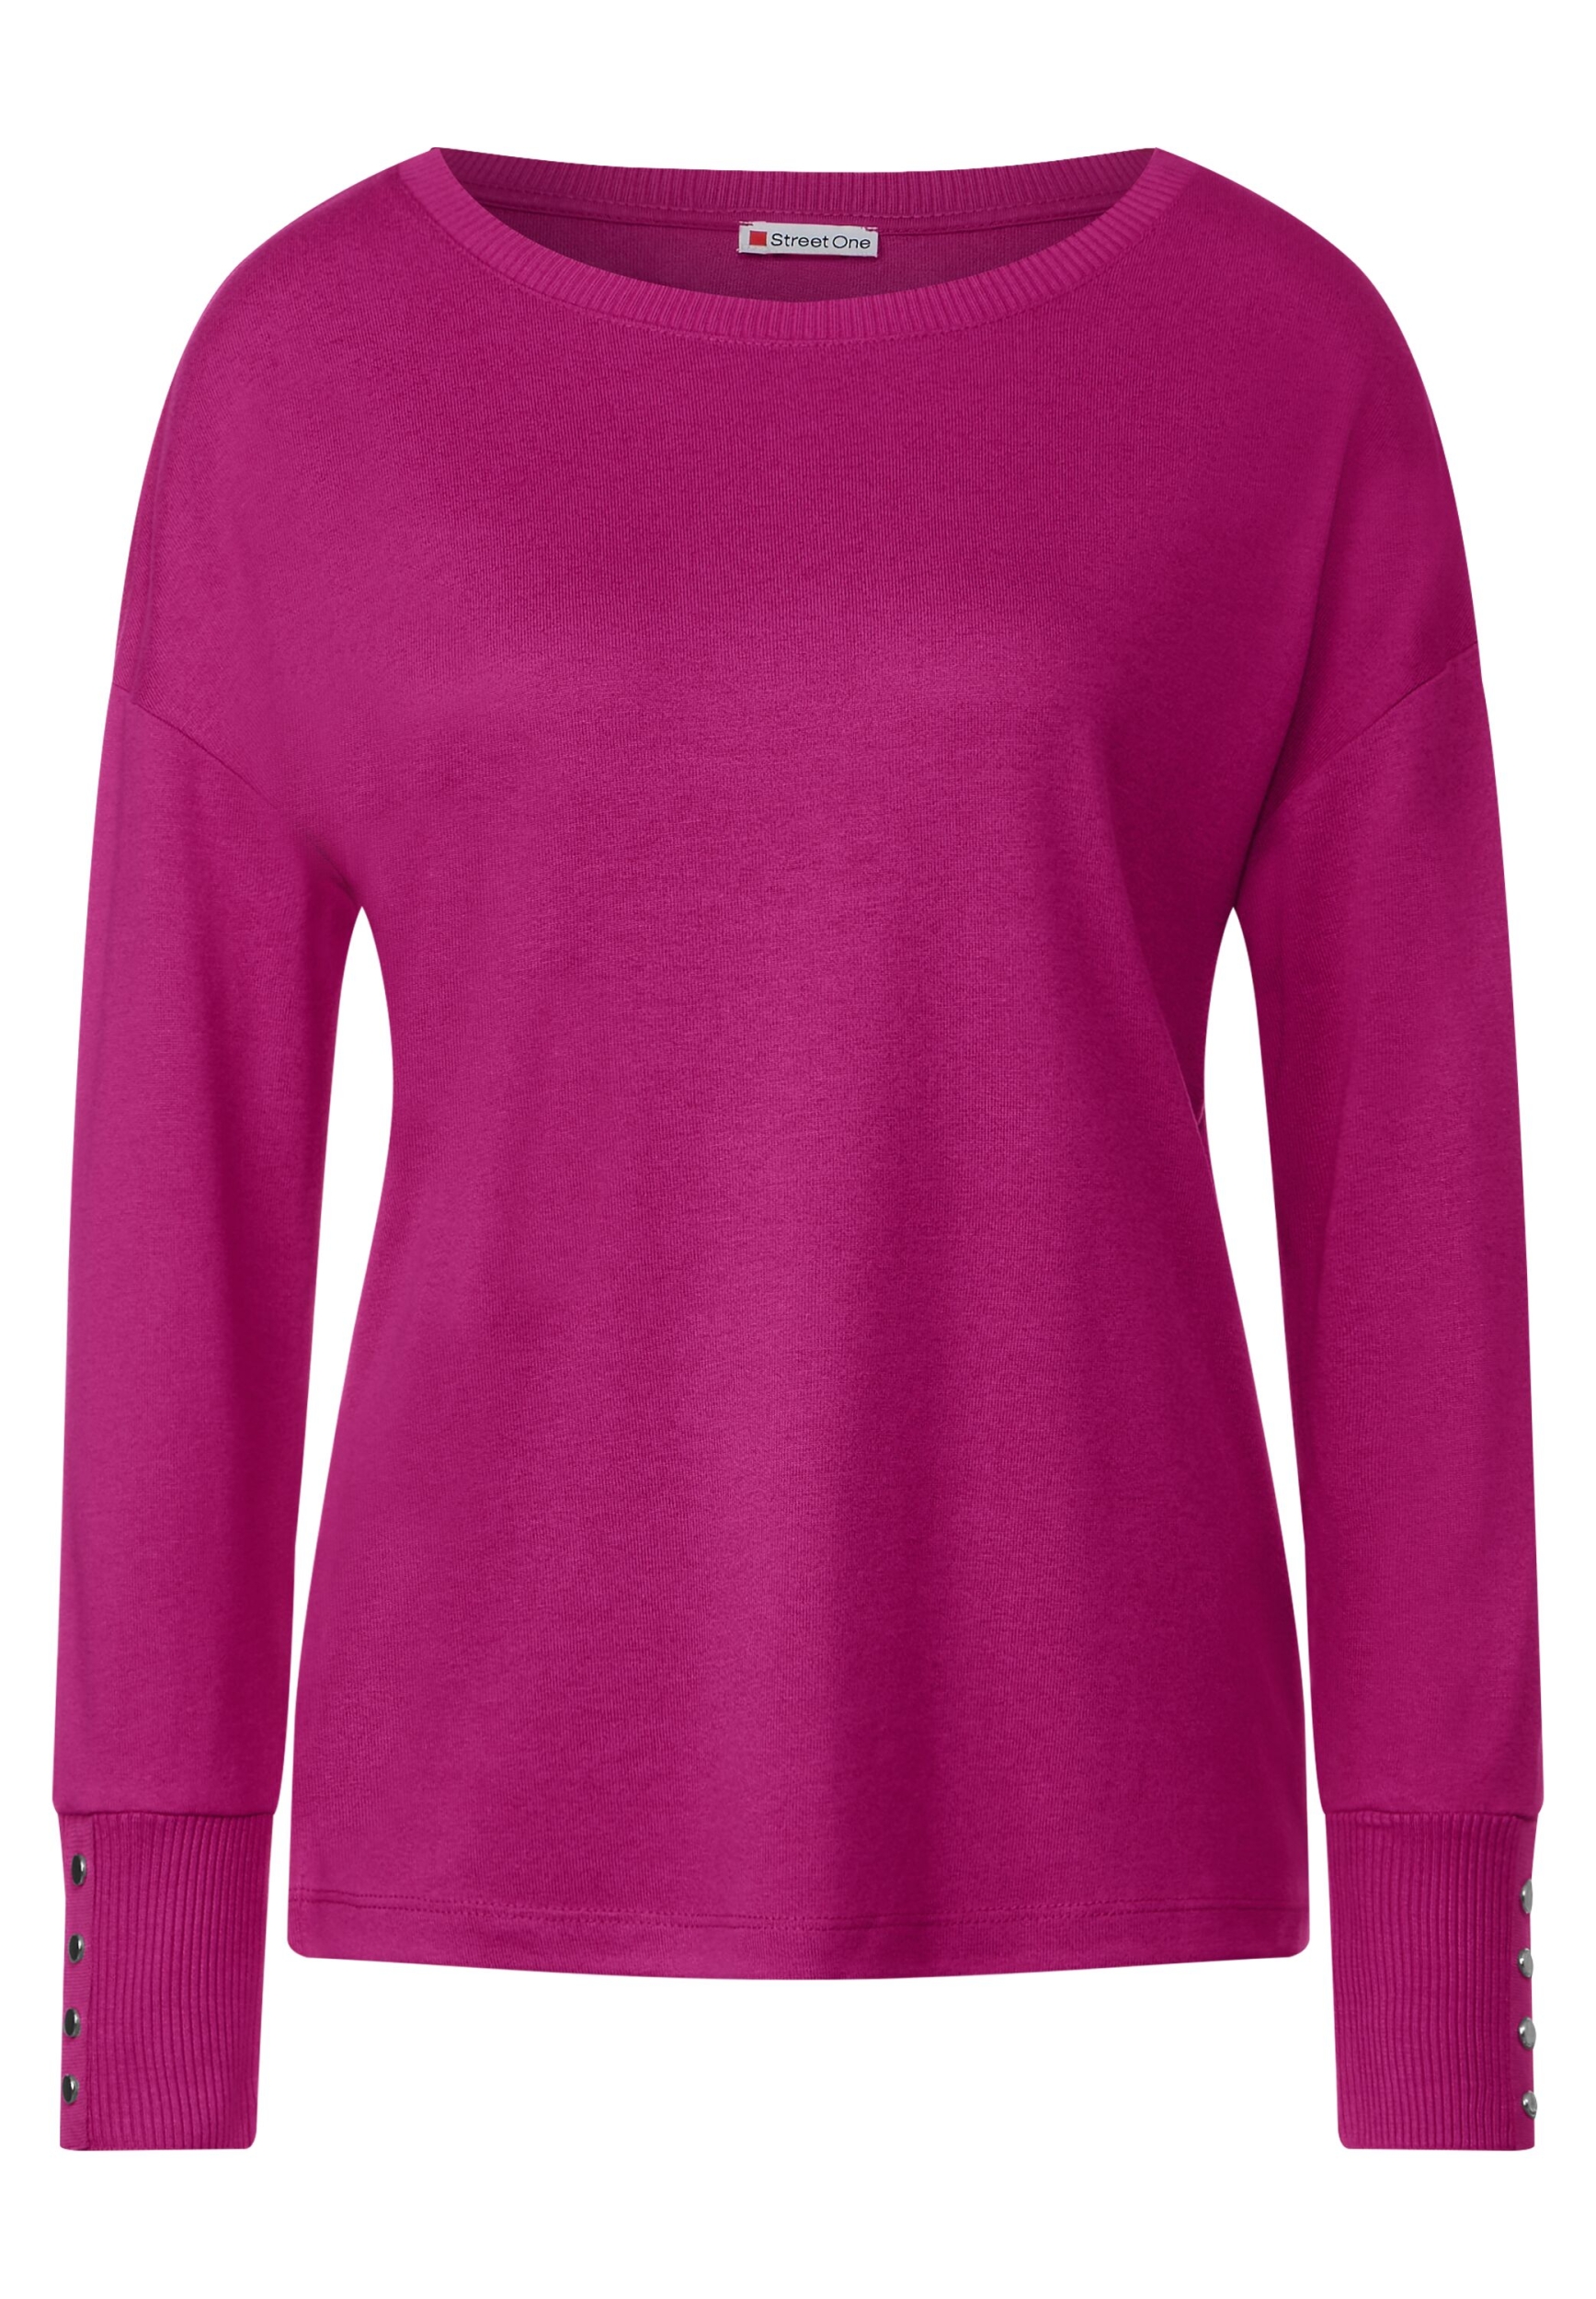 LTD QR | pink neck shirt u-boat bright | A320801-15463-38 | 38 cozy rib